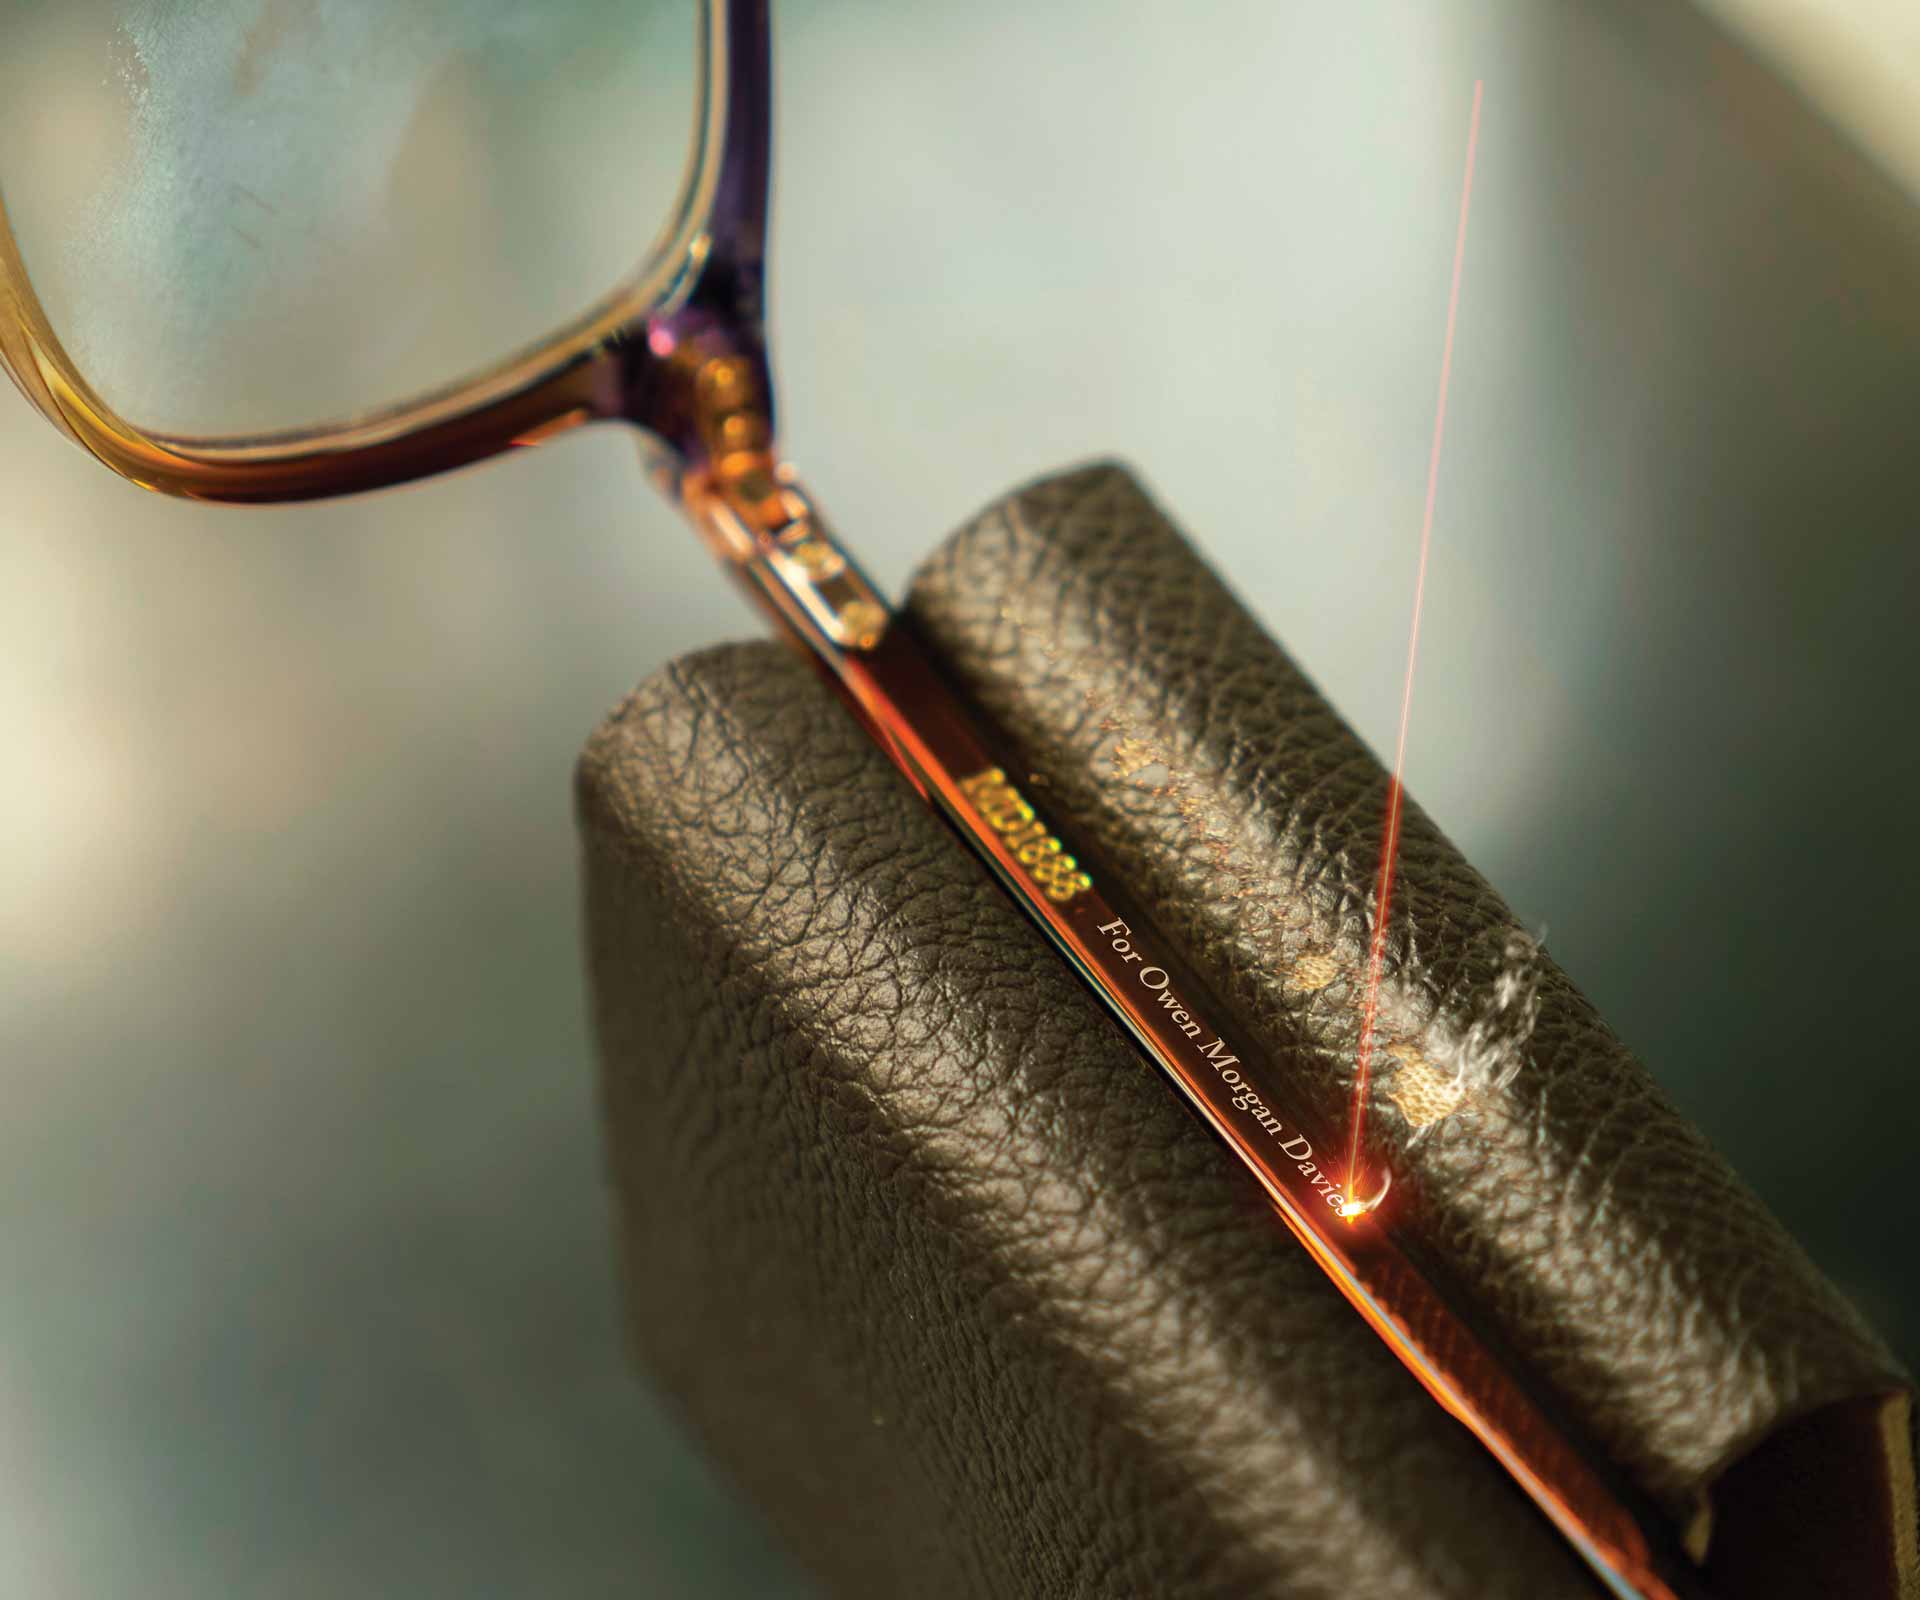 MD1888 eyewear laser engrave customer name in glasses